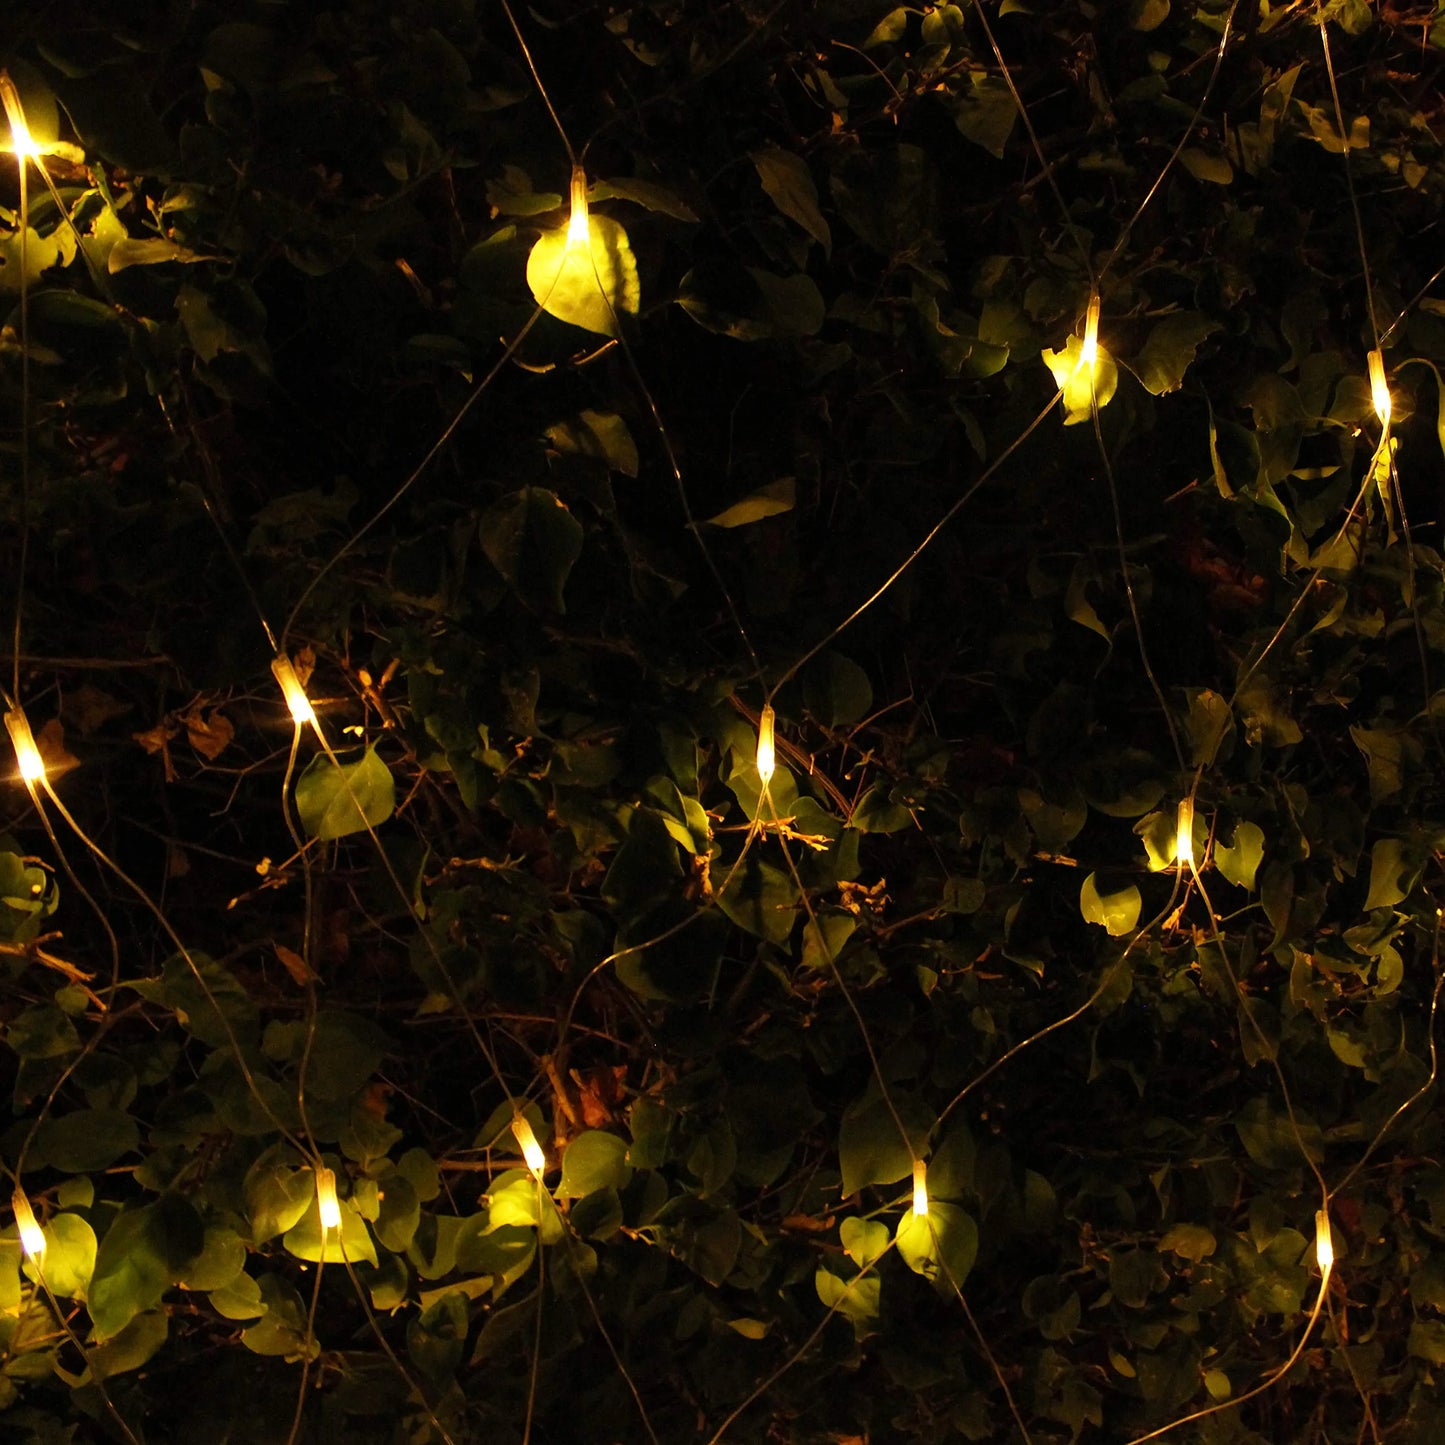 300 LED Christmas Net Lights, Warm White